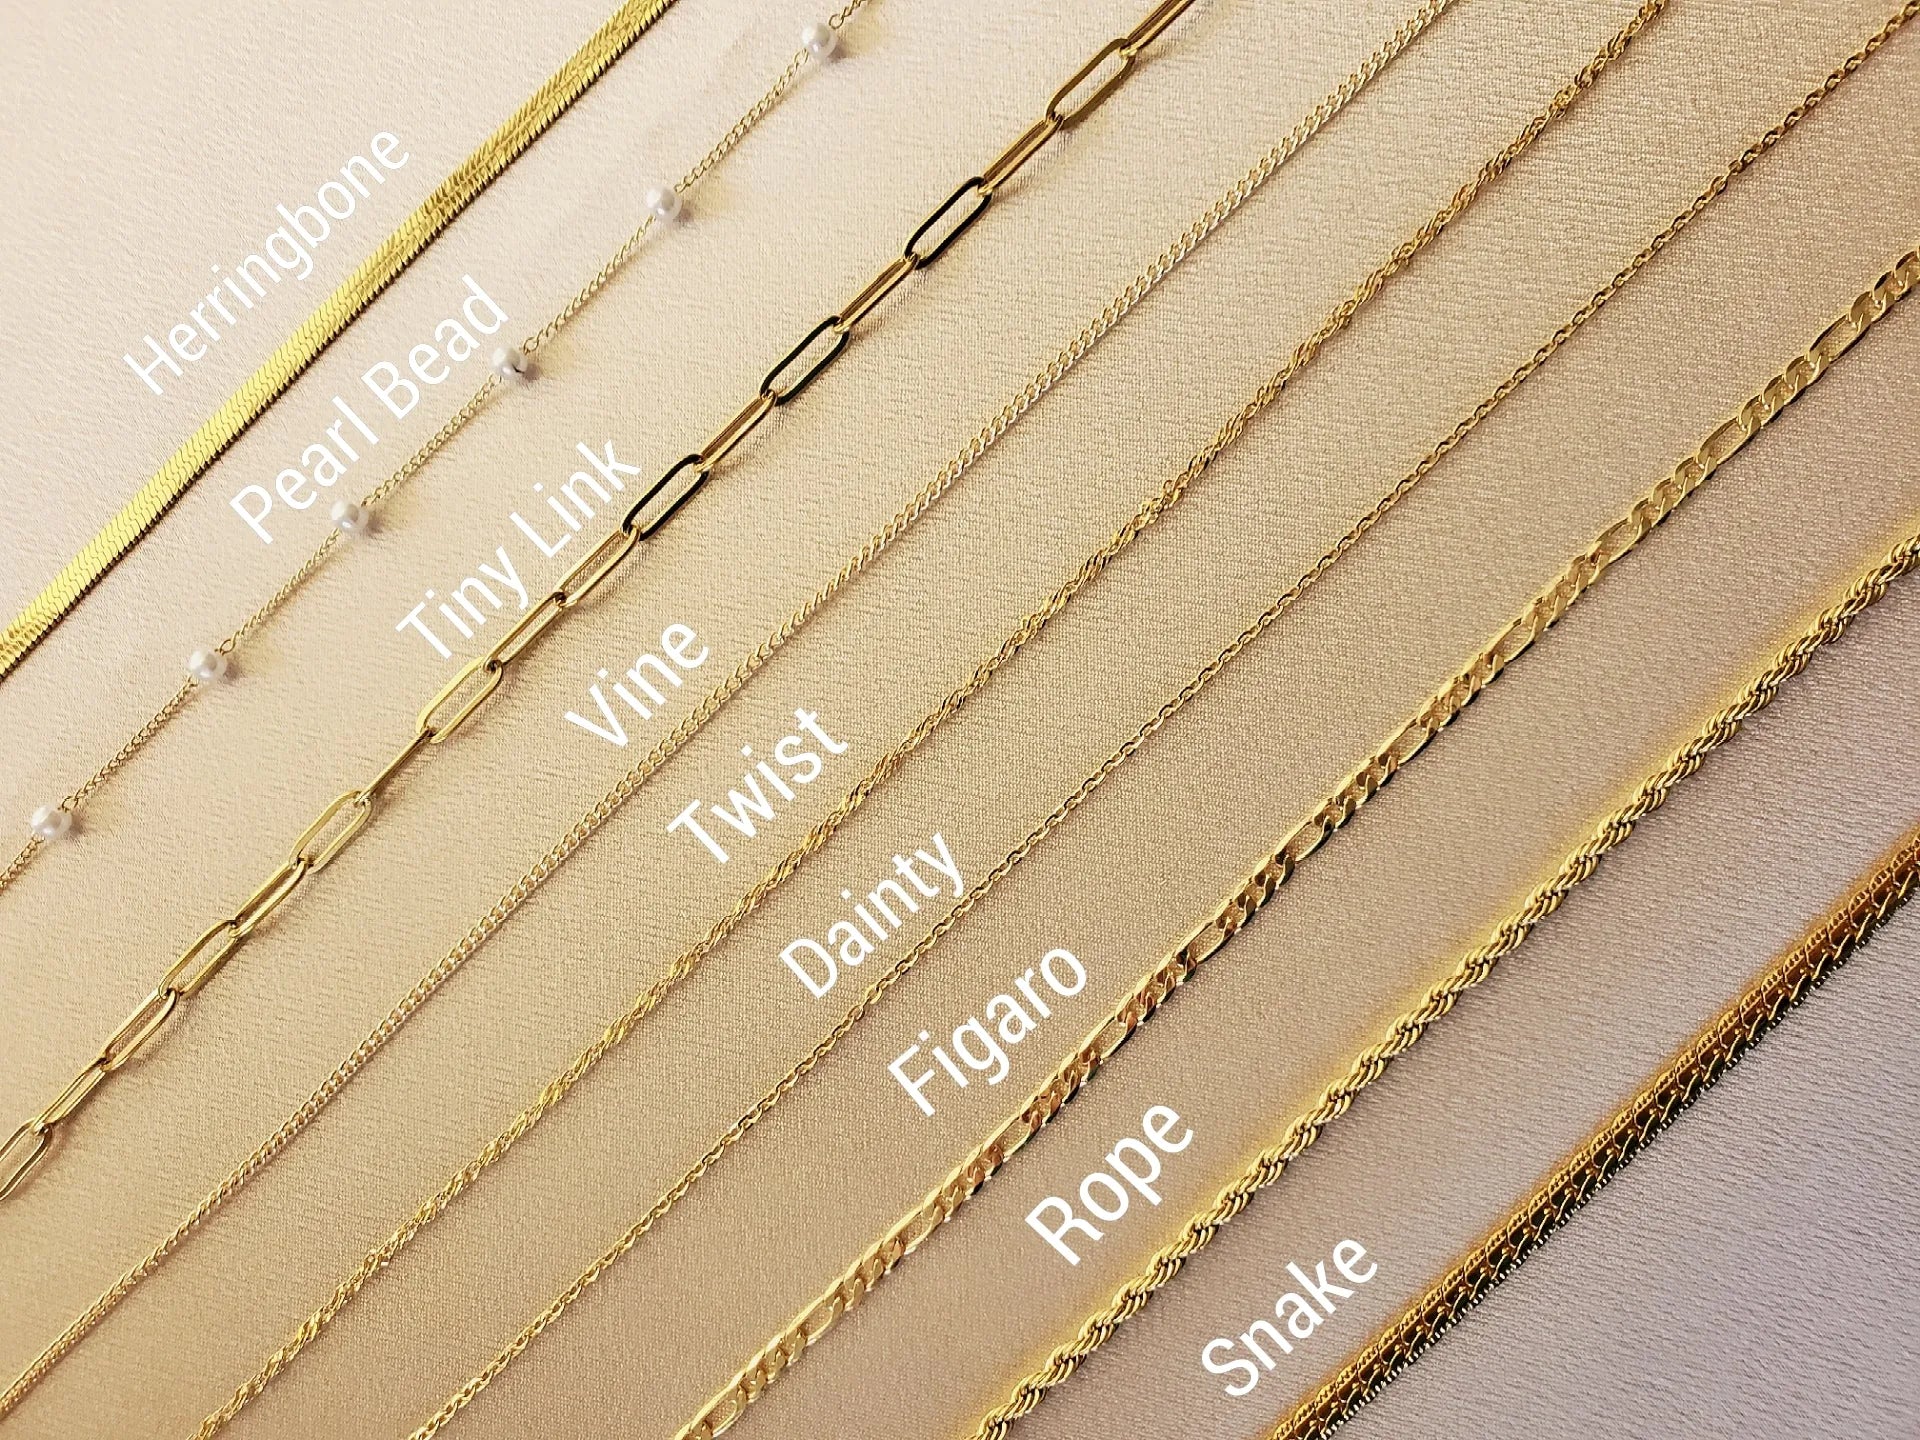 Golden Jewelry Chain Types, from top to bottom: Herringbone; Pearl Bead; Tinylink; Vine; Twist; Dainty; Figaro; Rope; Snake.